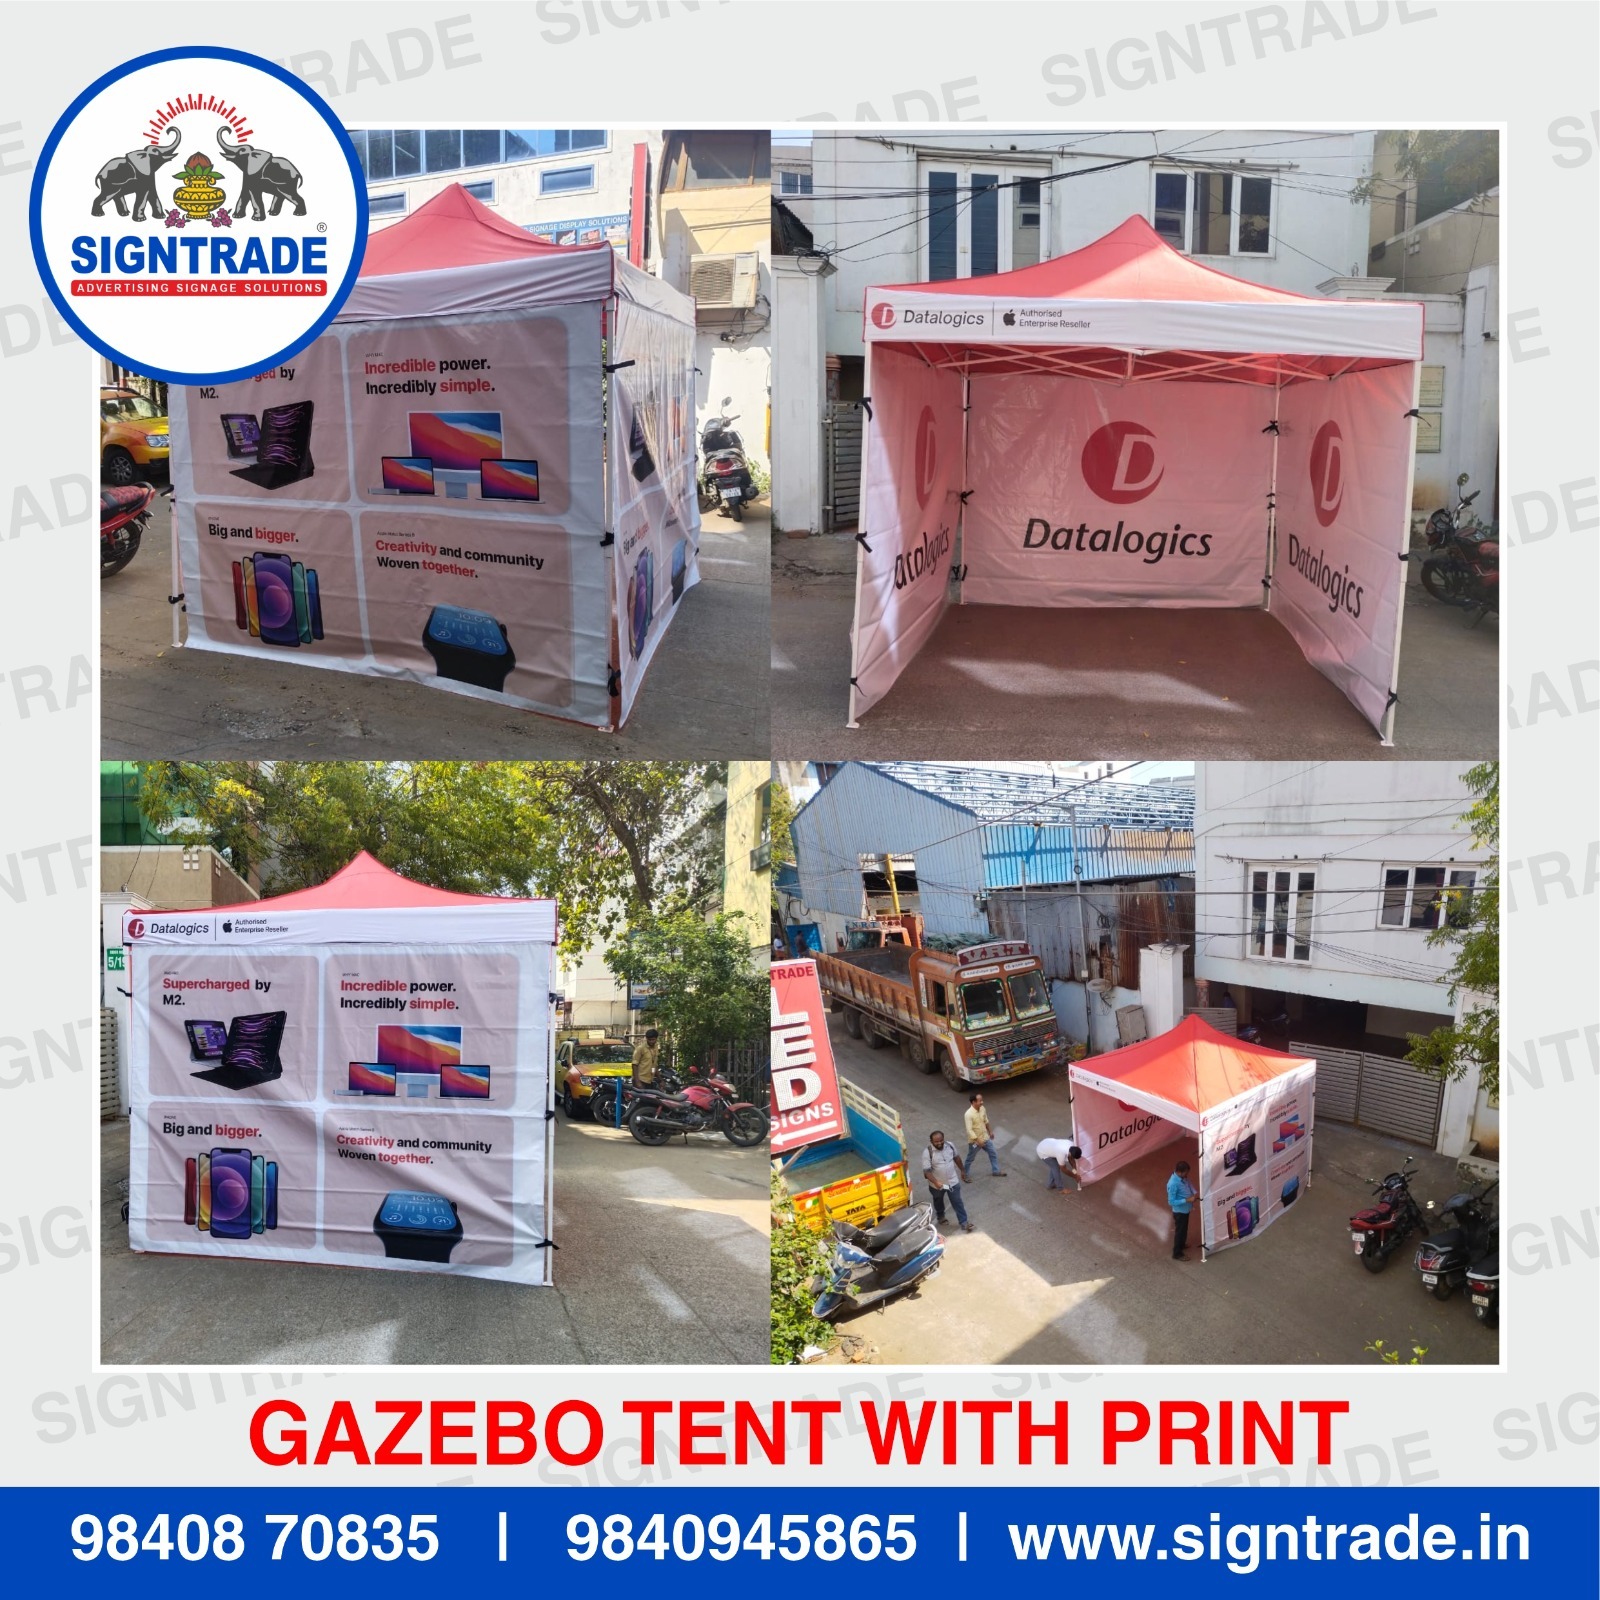 Gazebo Tent manufacturers near me in Guindy, Chennai